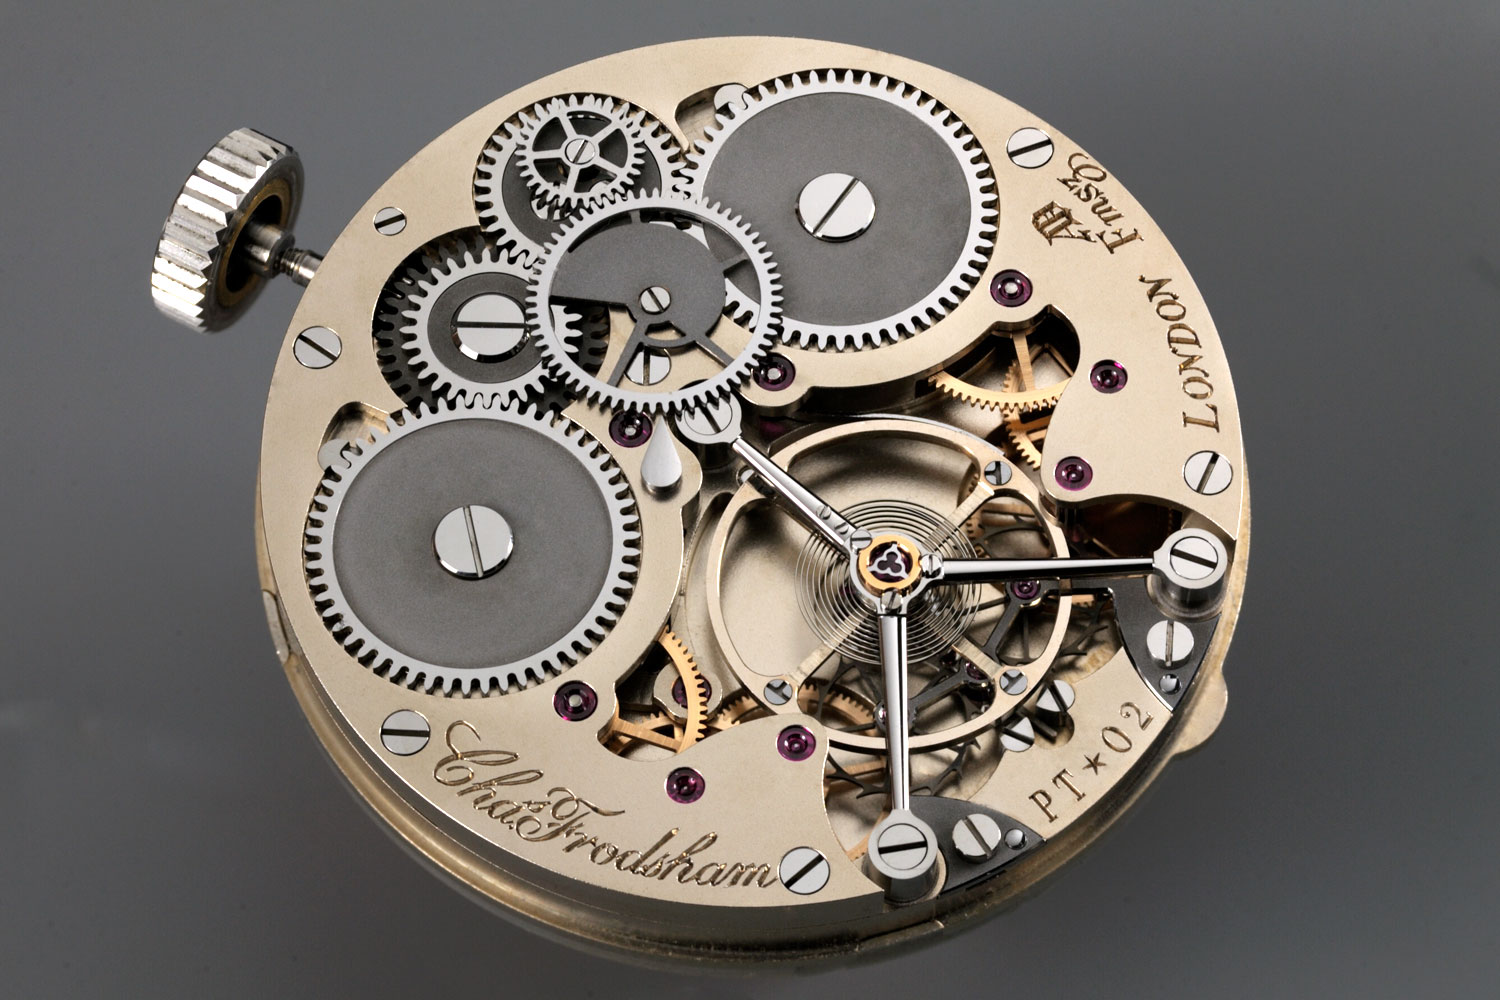 Charles Frodsham Ltd Wristwatch